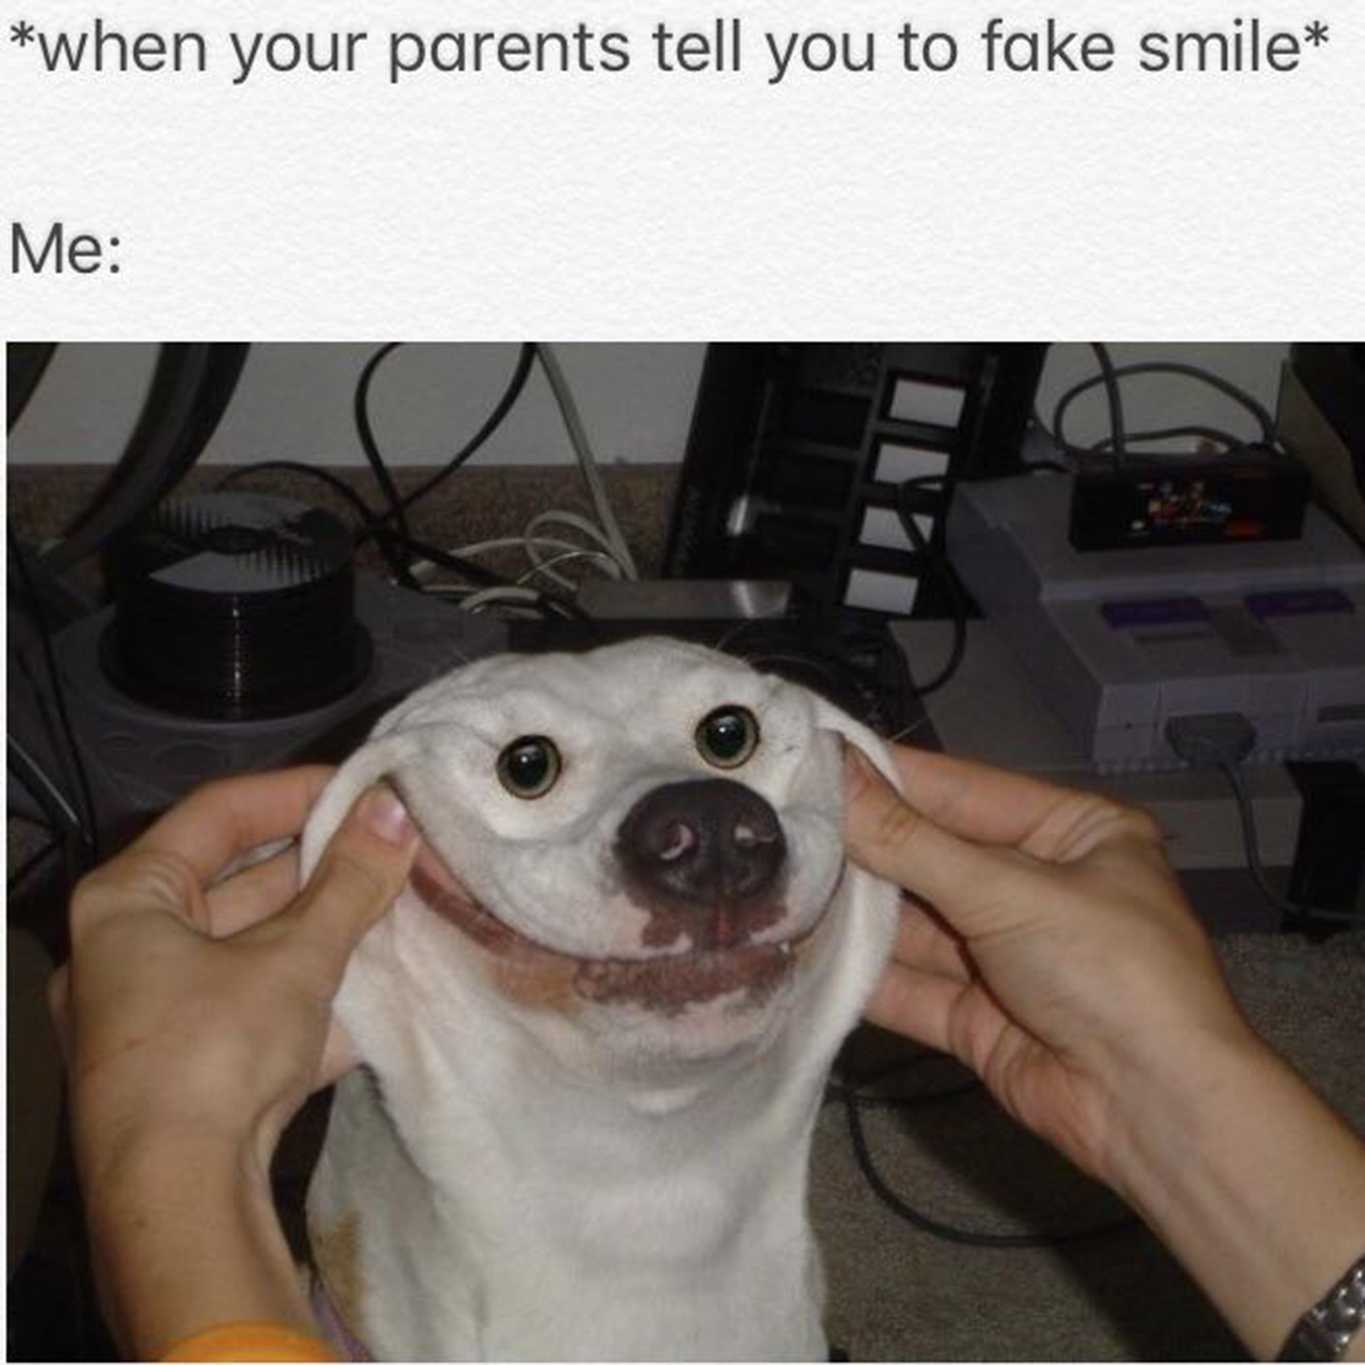 Fake Smile Meme - IdleMeme.